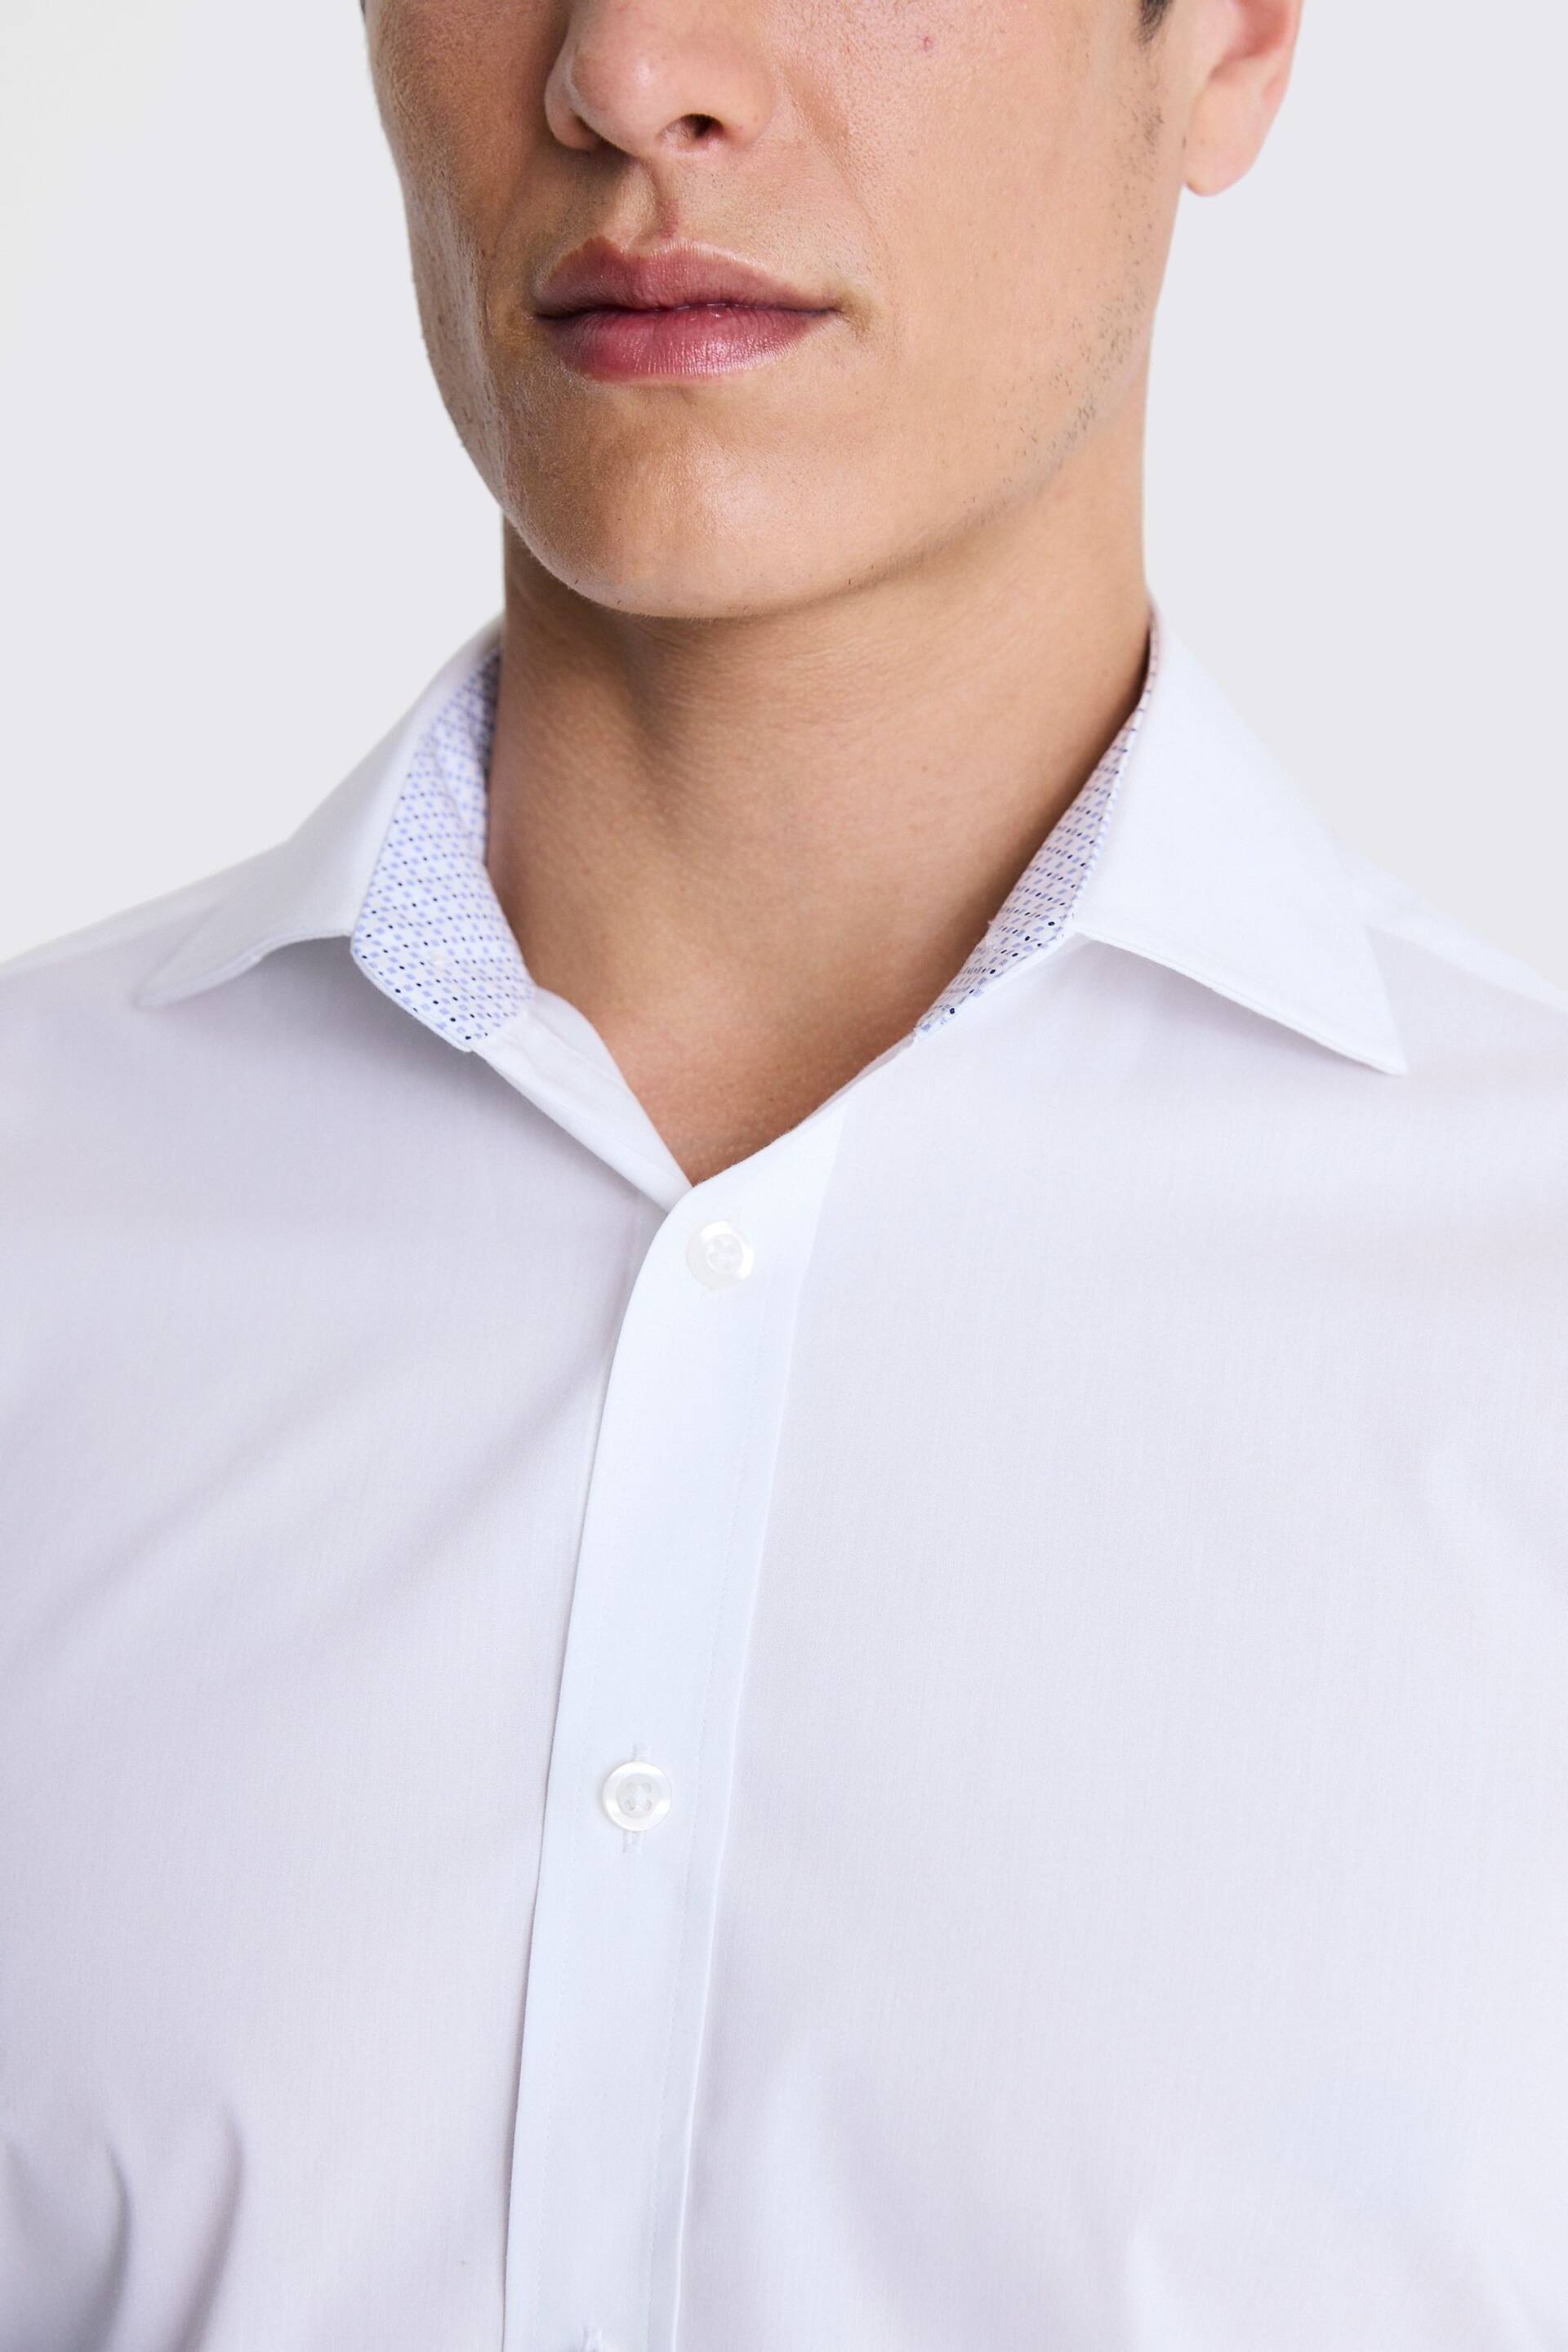 MOSS Off White Single Cuff Stretch Shirt - Image 3 of 3